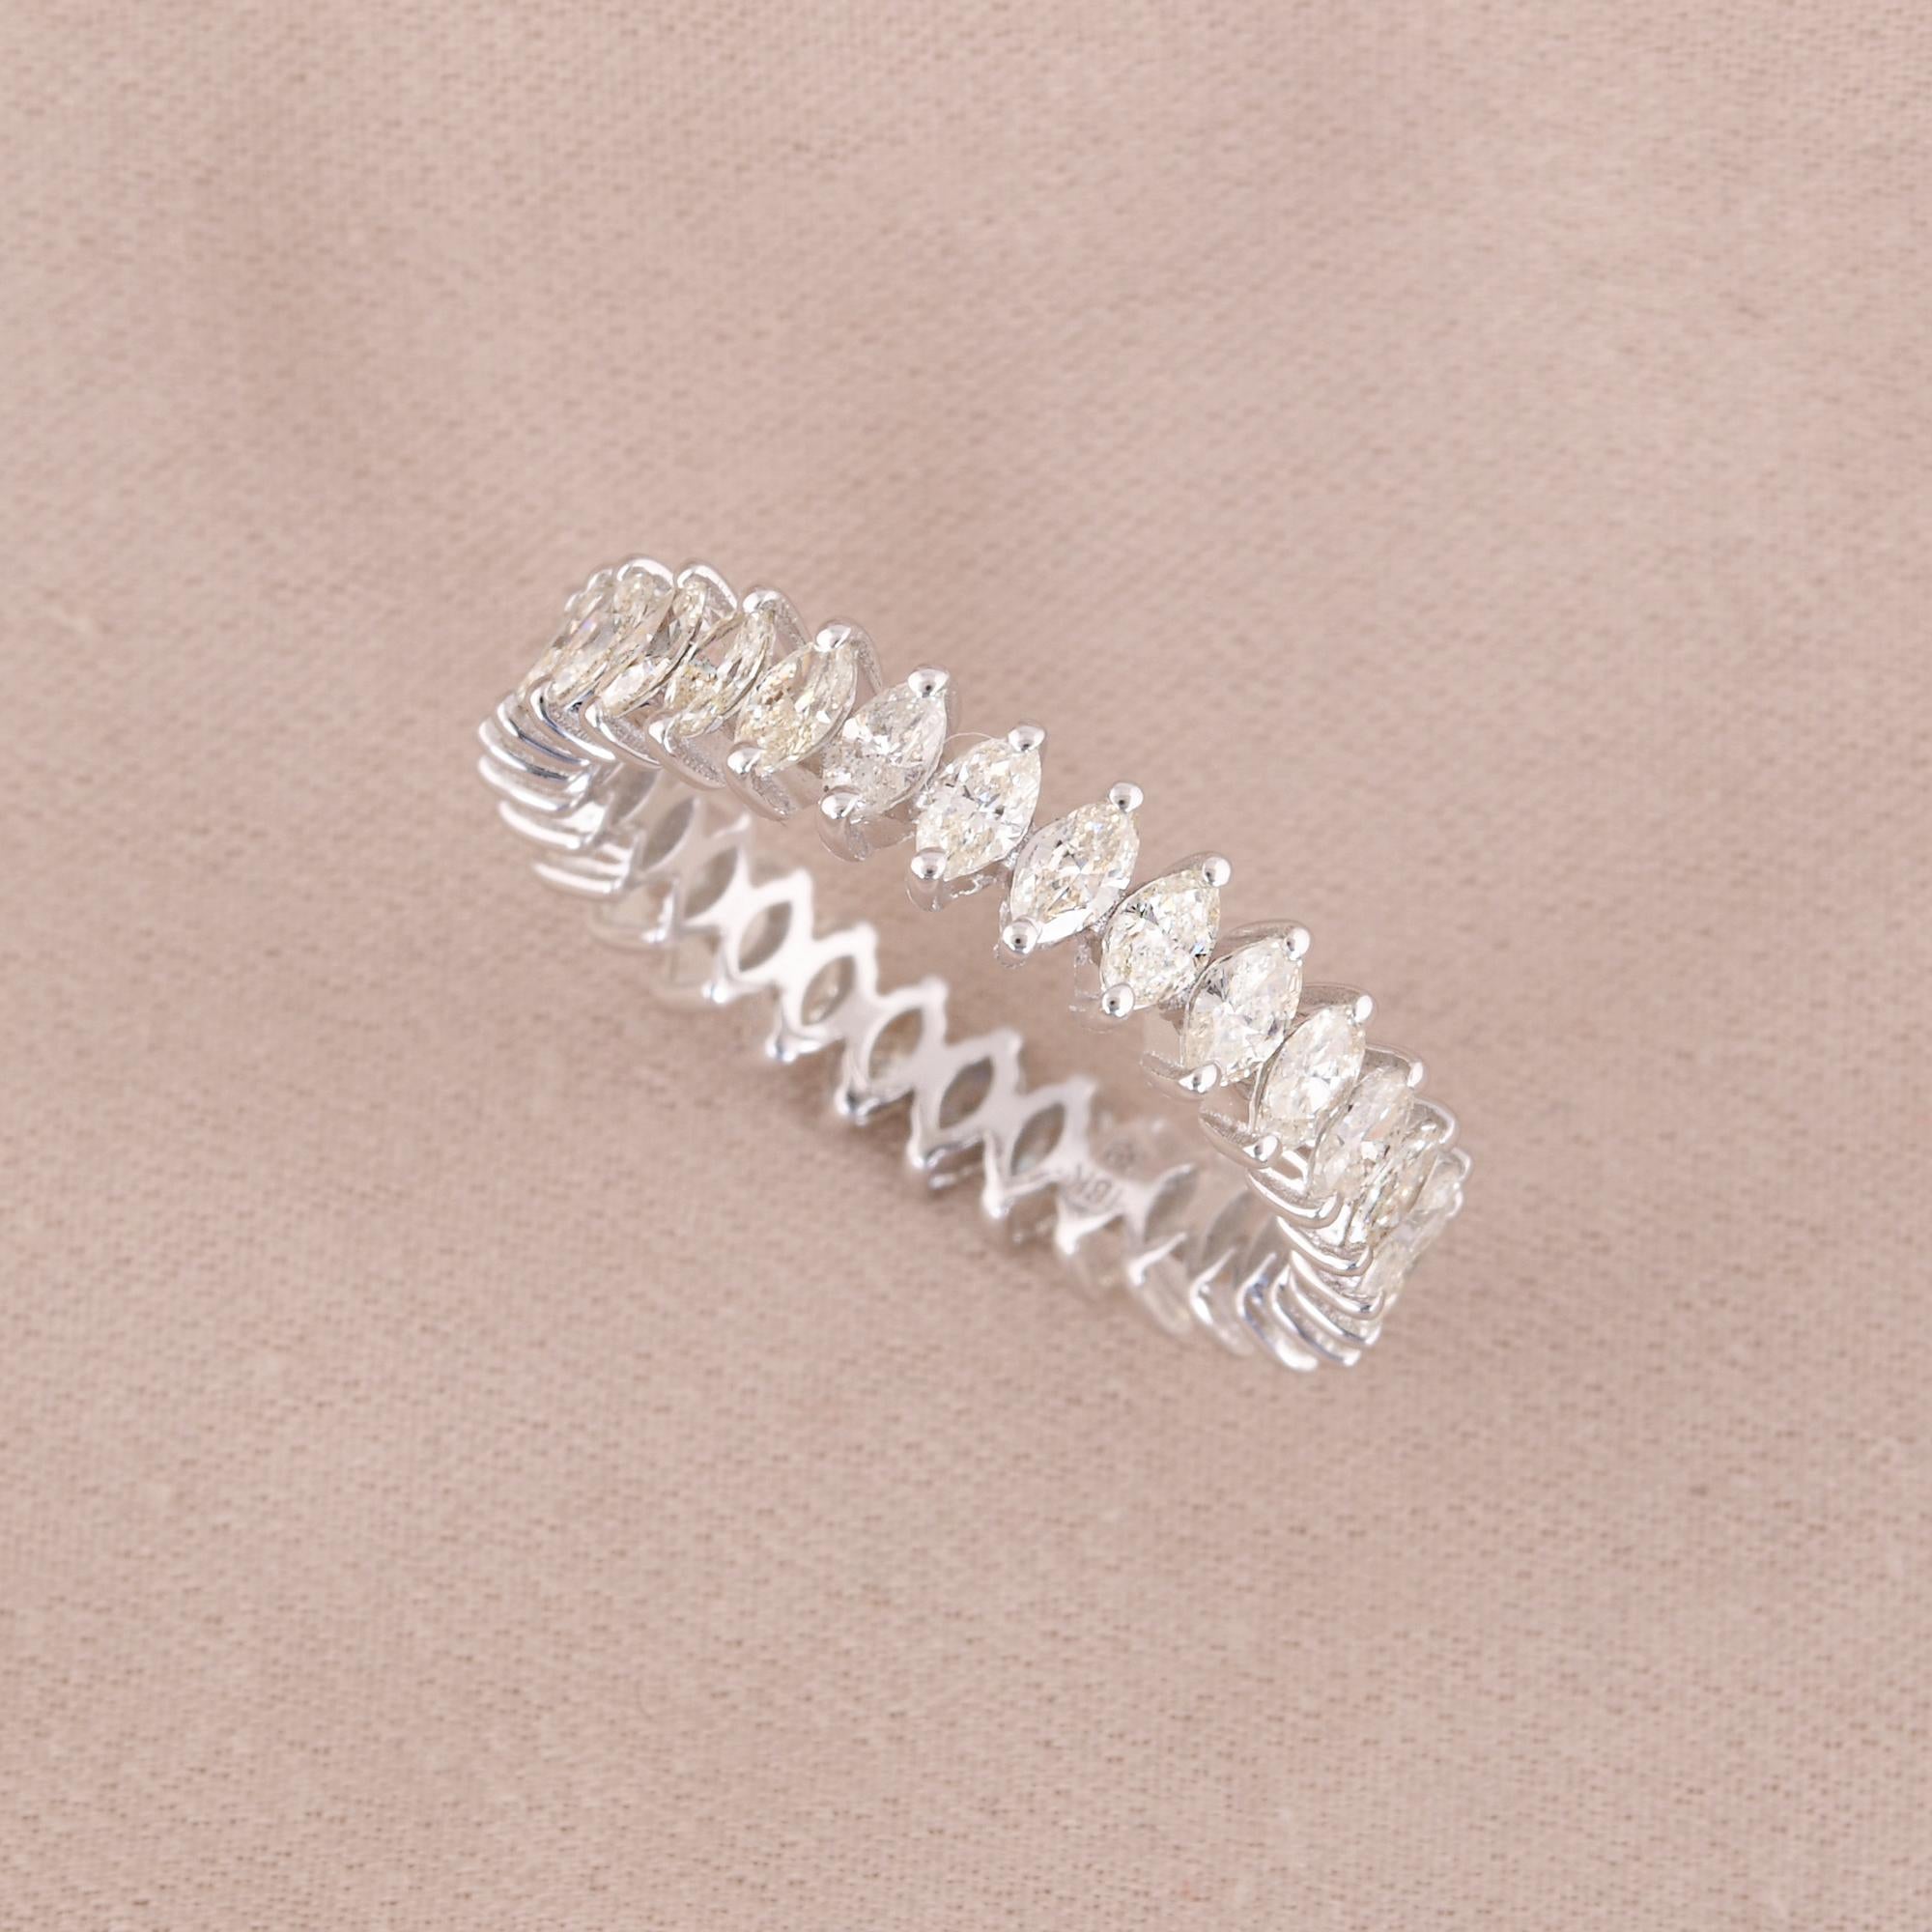 Pear Cut 1.65 Carat Pear Shape Diamond Band Ring 18 Karat White Gold Handmade Jewelry For Sale